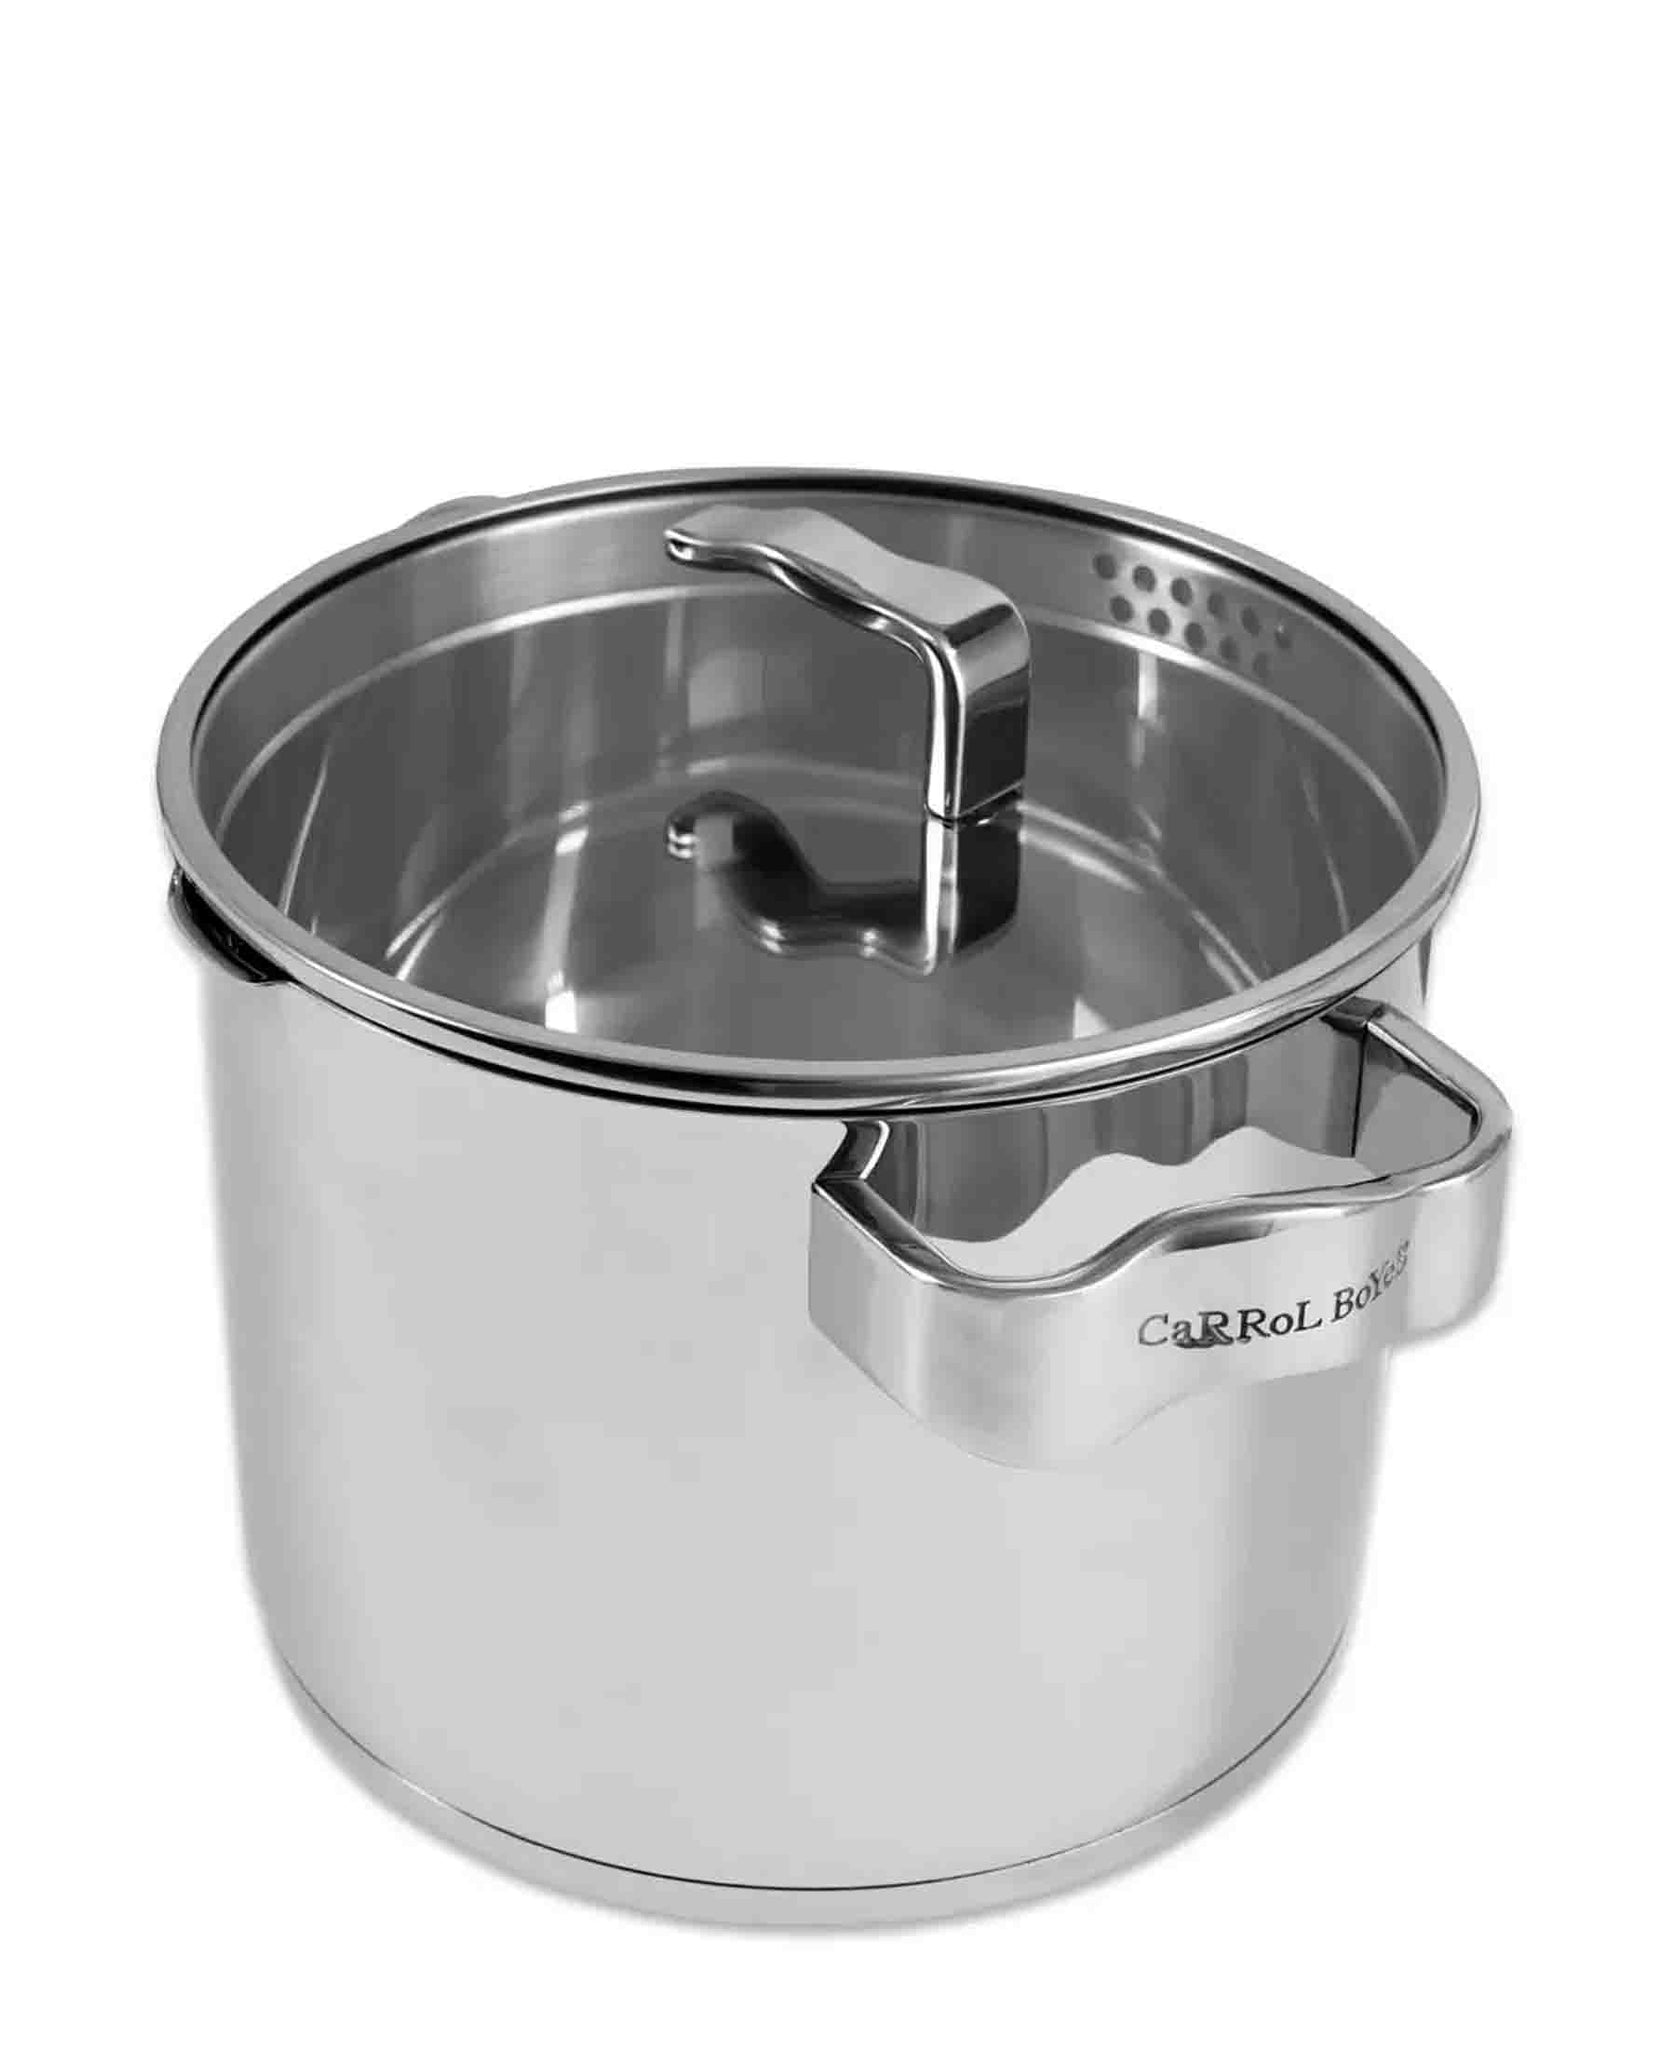 Carrol Boyes Flow 24cm Stock Pot - Silver – The Culinarium